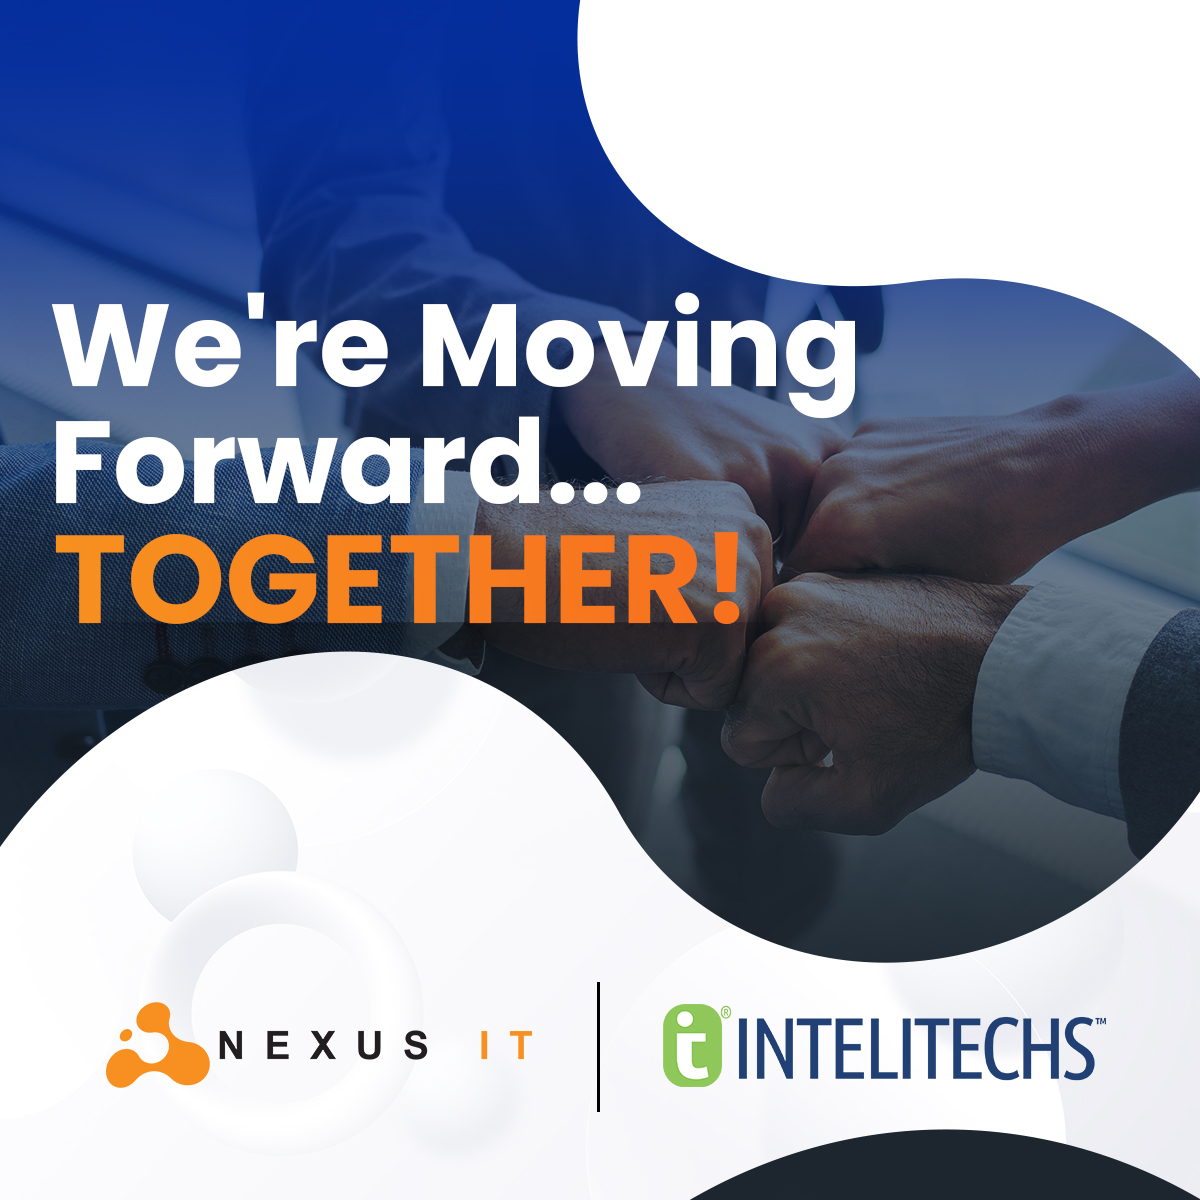 Salt Lake City Based IT Services Provider, Intelitechs Merges with Nexus IT